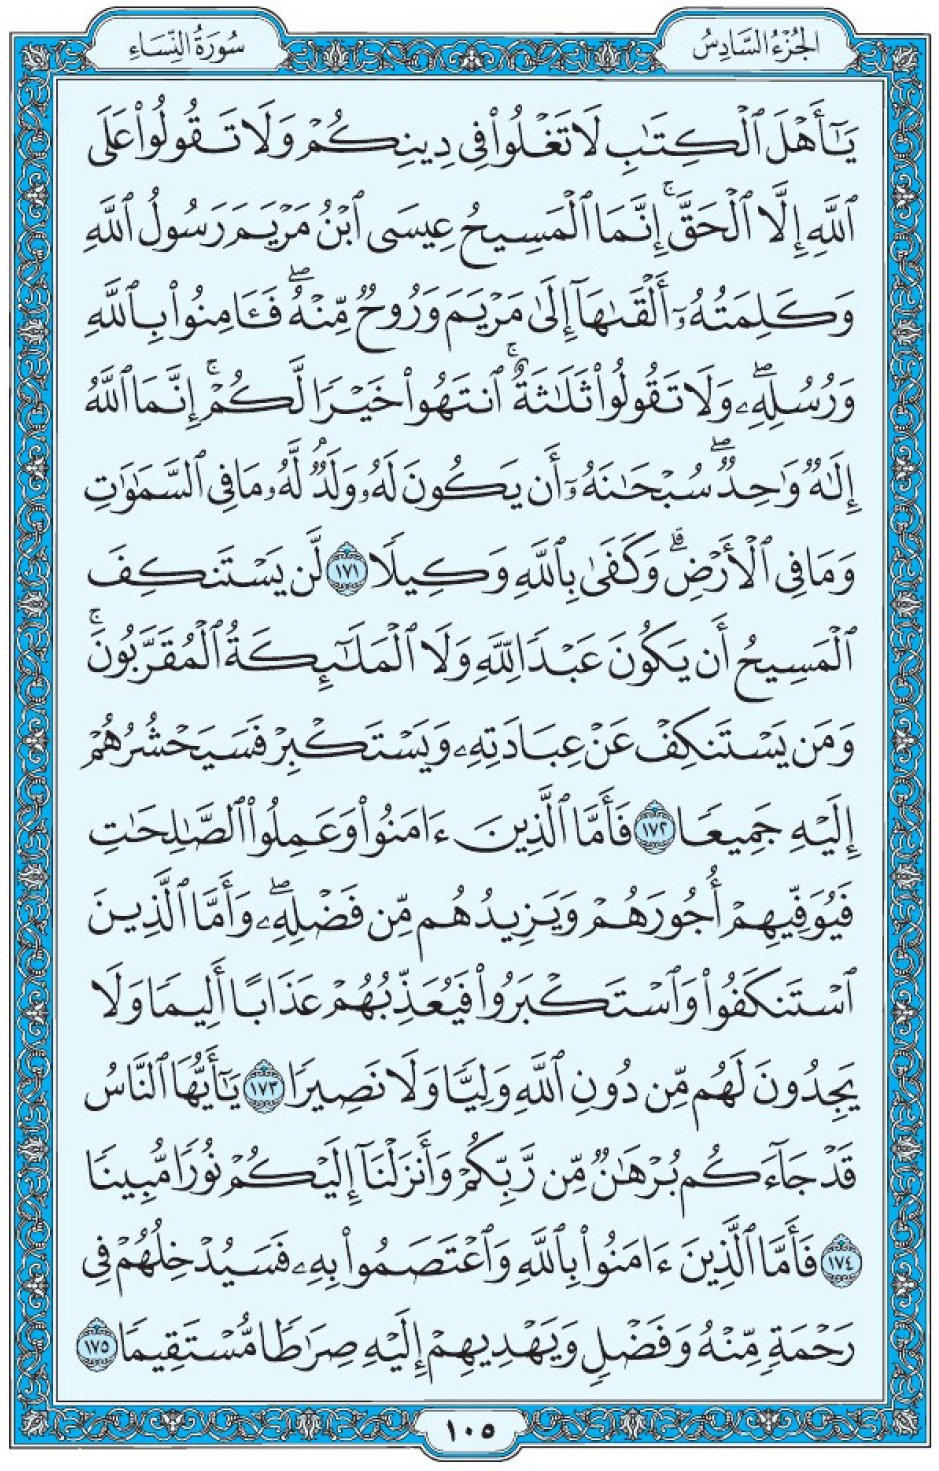 Коран Мединский мусхаф страница 105, Ан-Ниса, аят 171-175